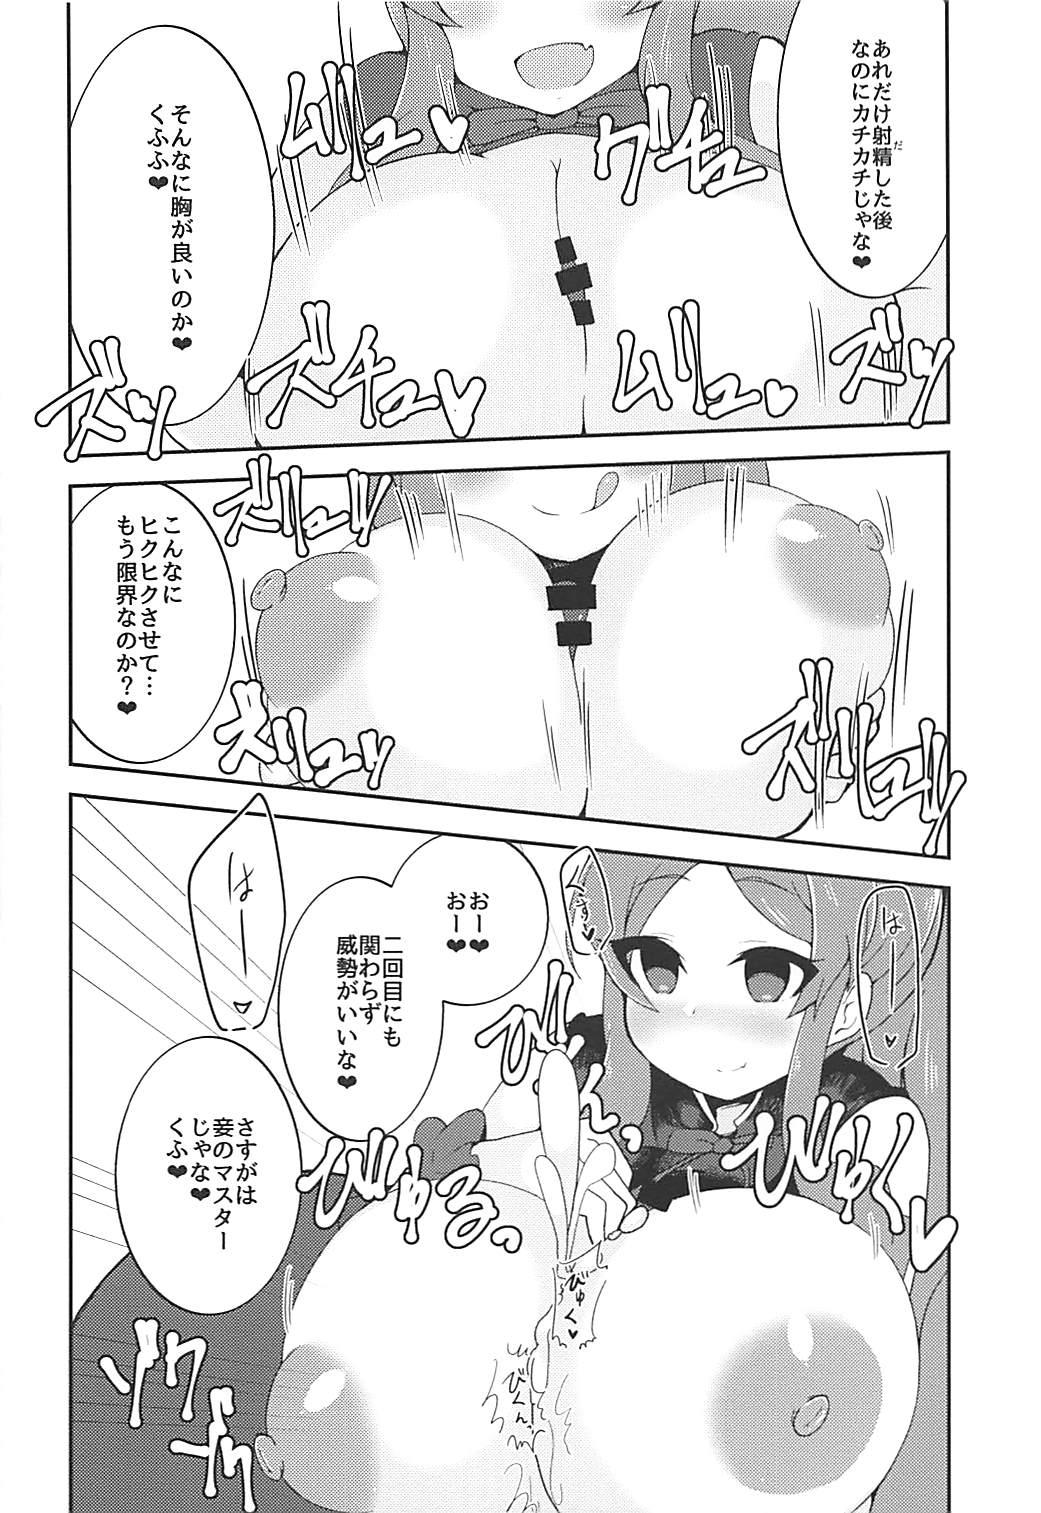 Juicy Ookii no ga Osuki? - Fate grand order English - Page 7